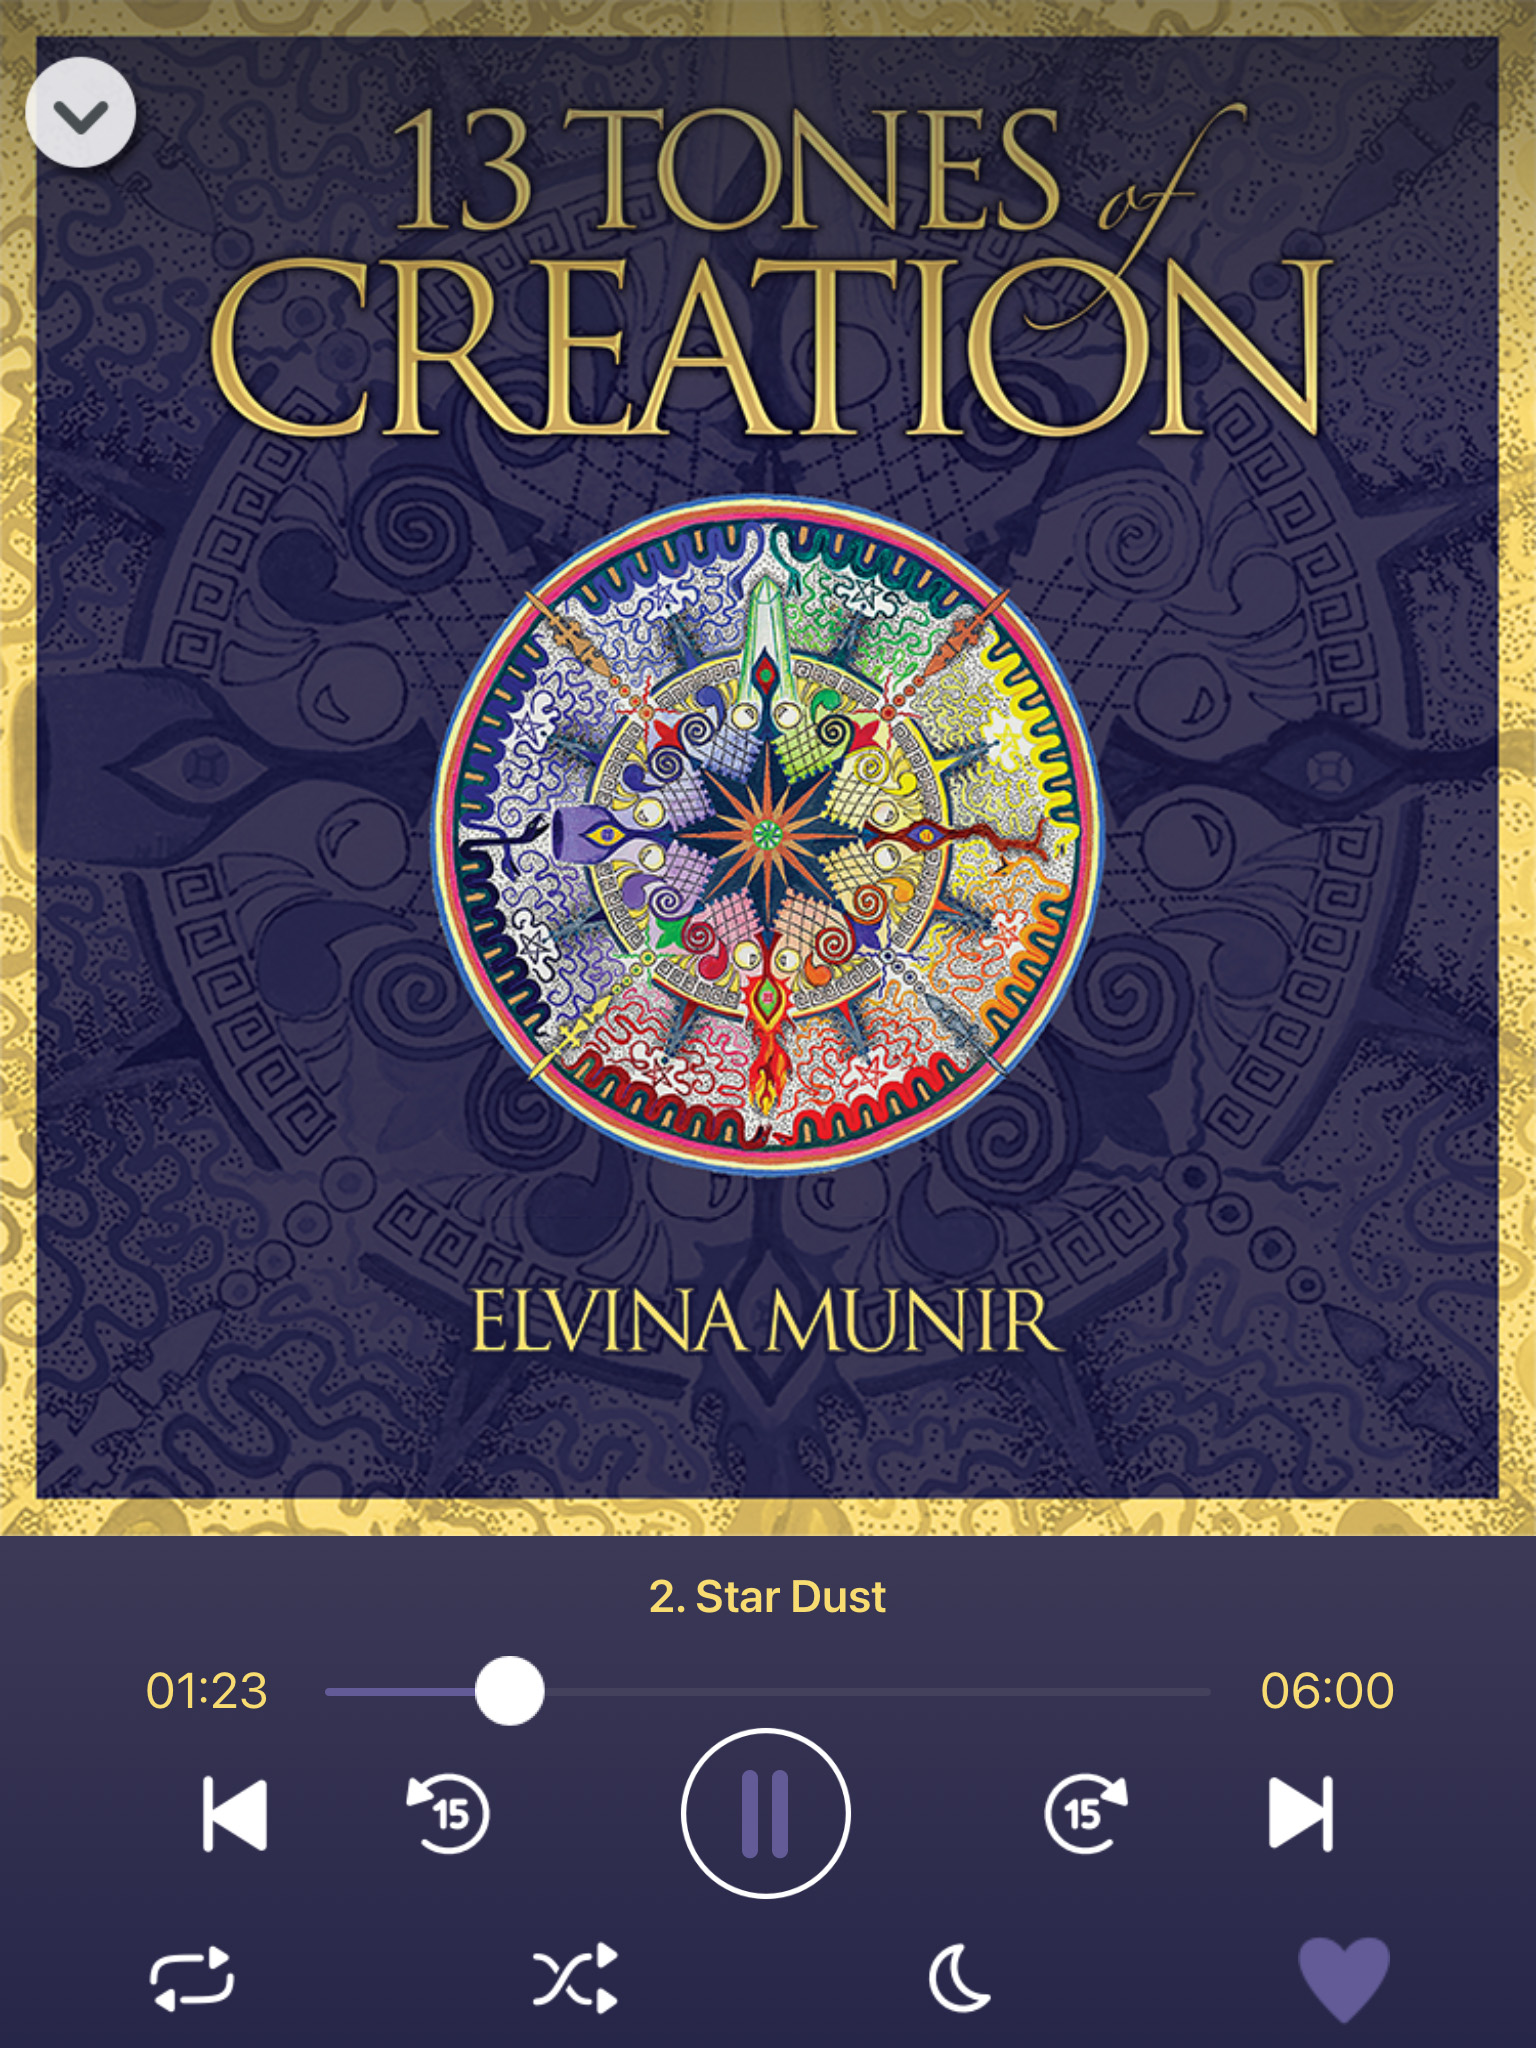 13 Tones of Creation by Elvina Munir